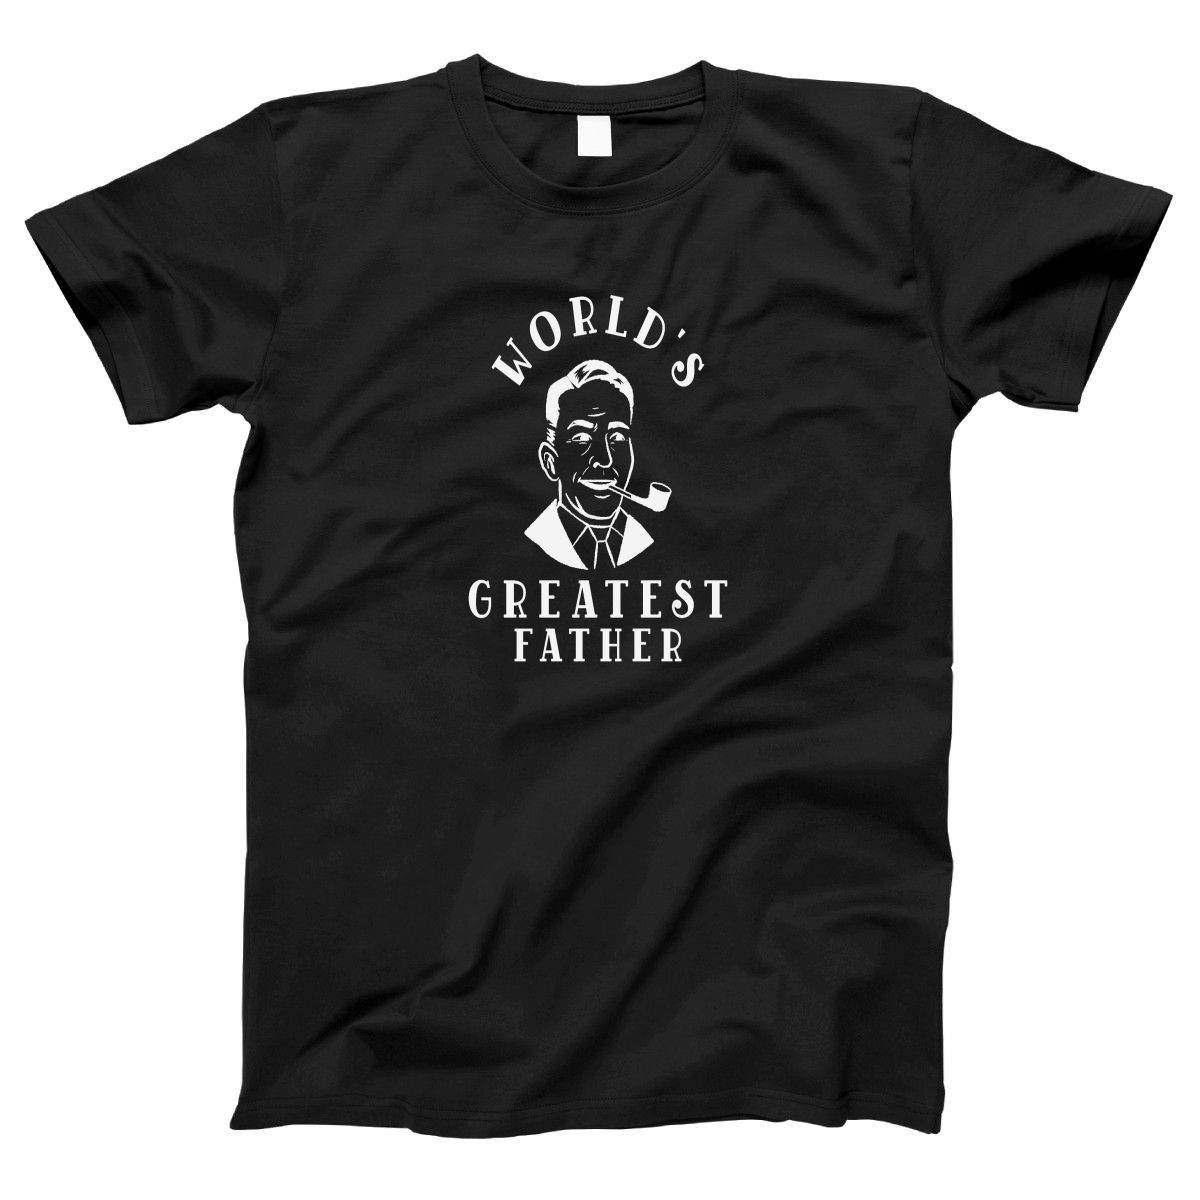 World's Greatest Father Women's T-shirt | Black